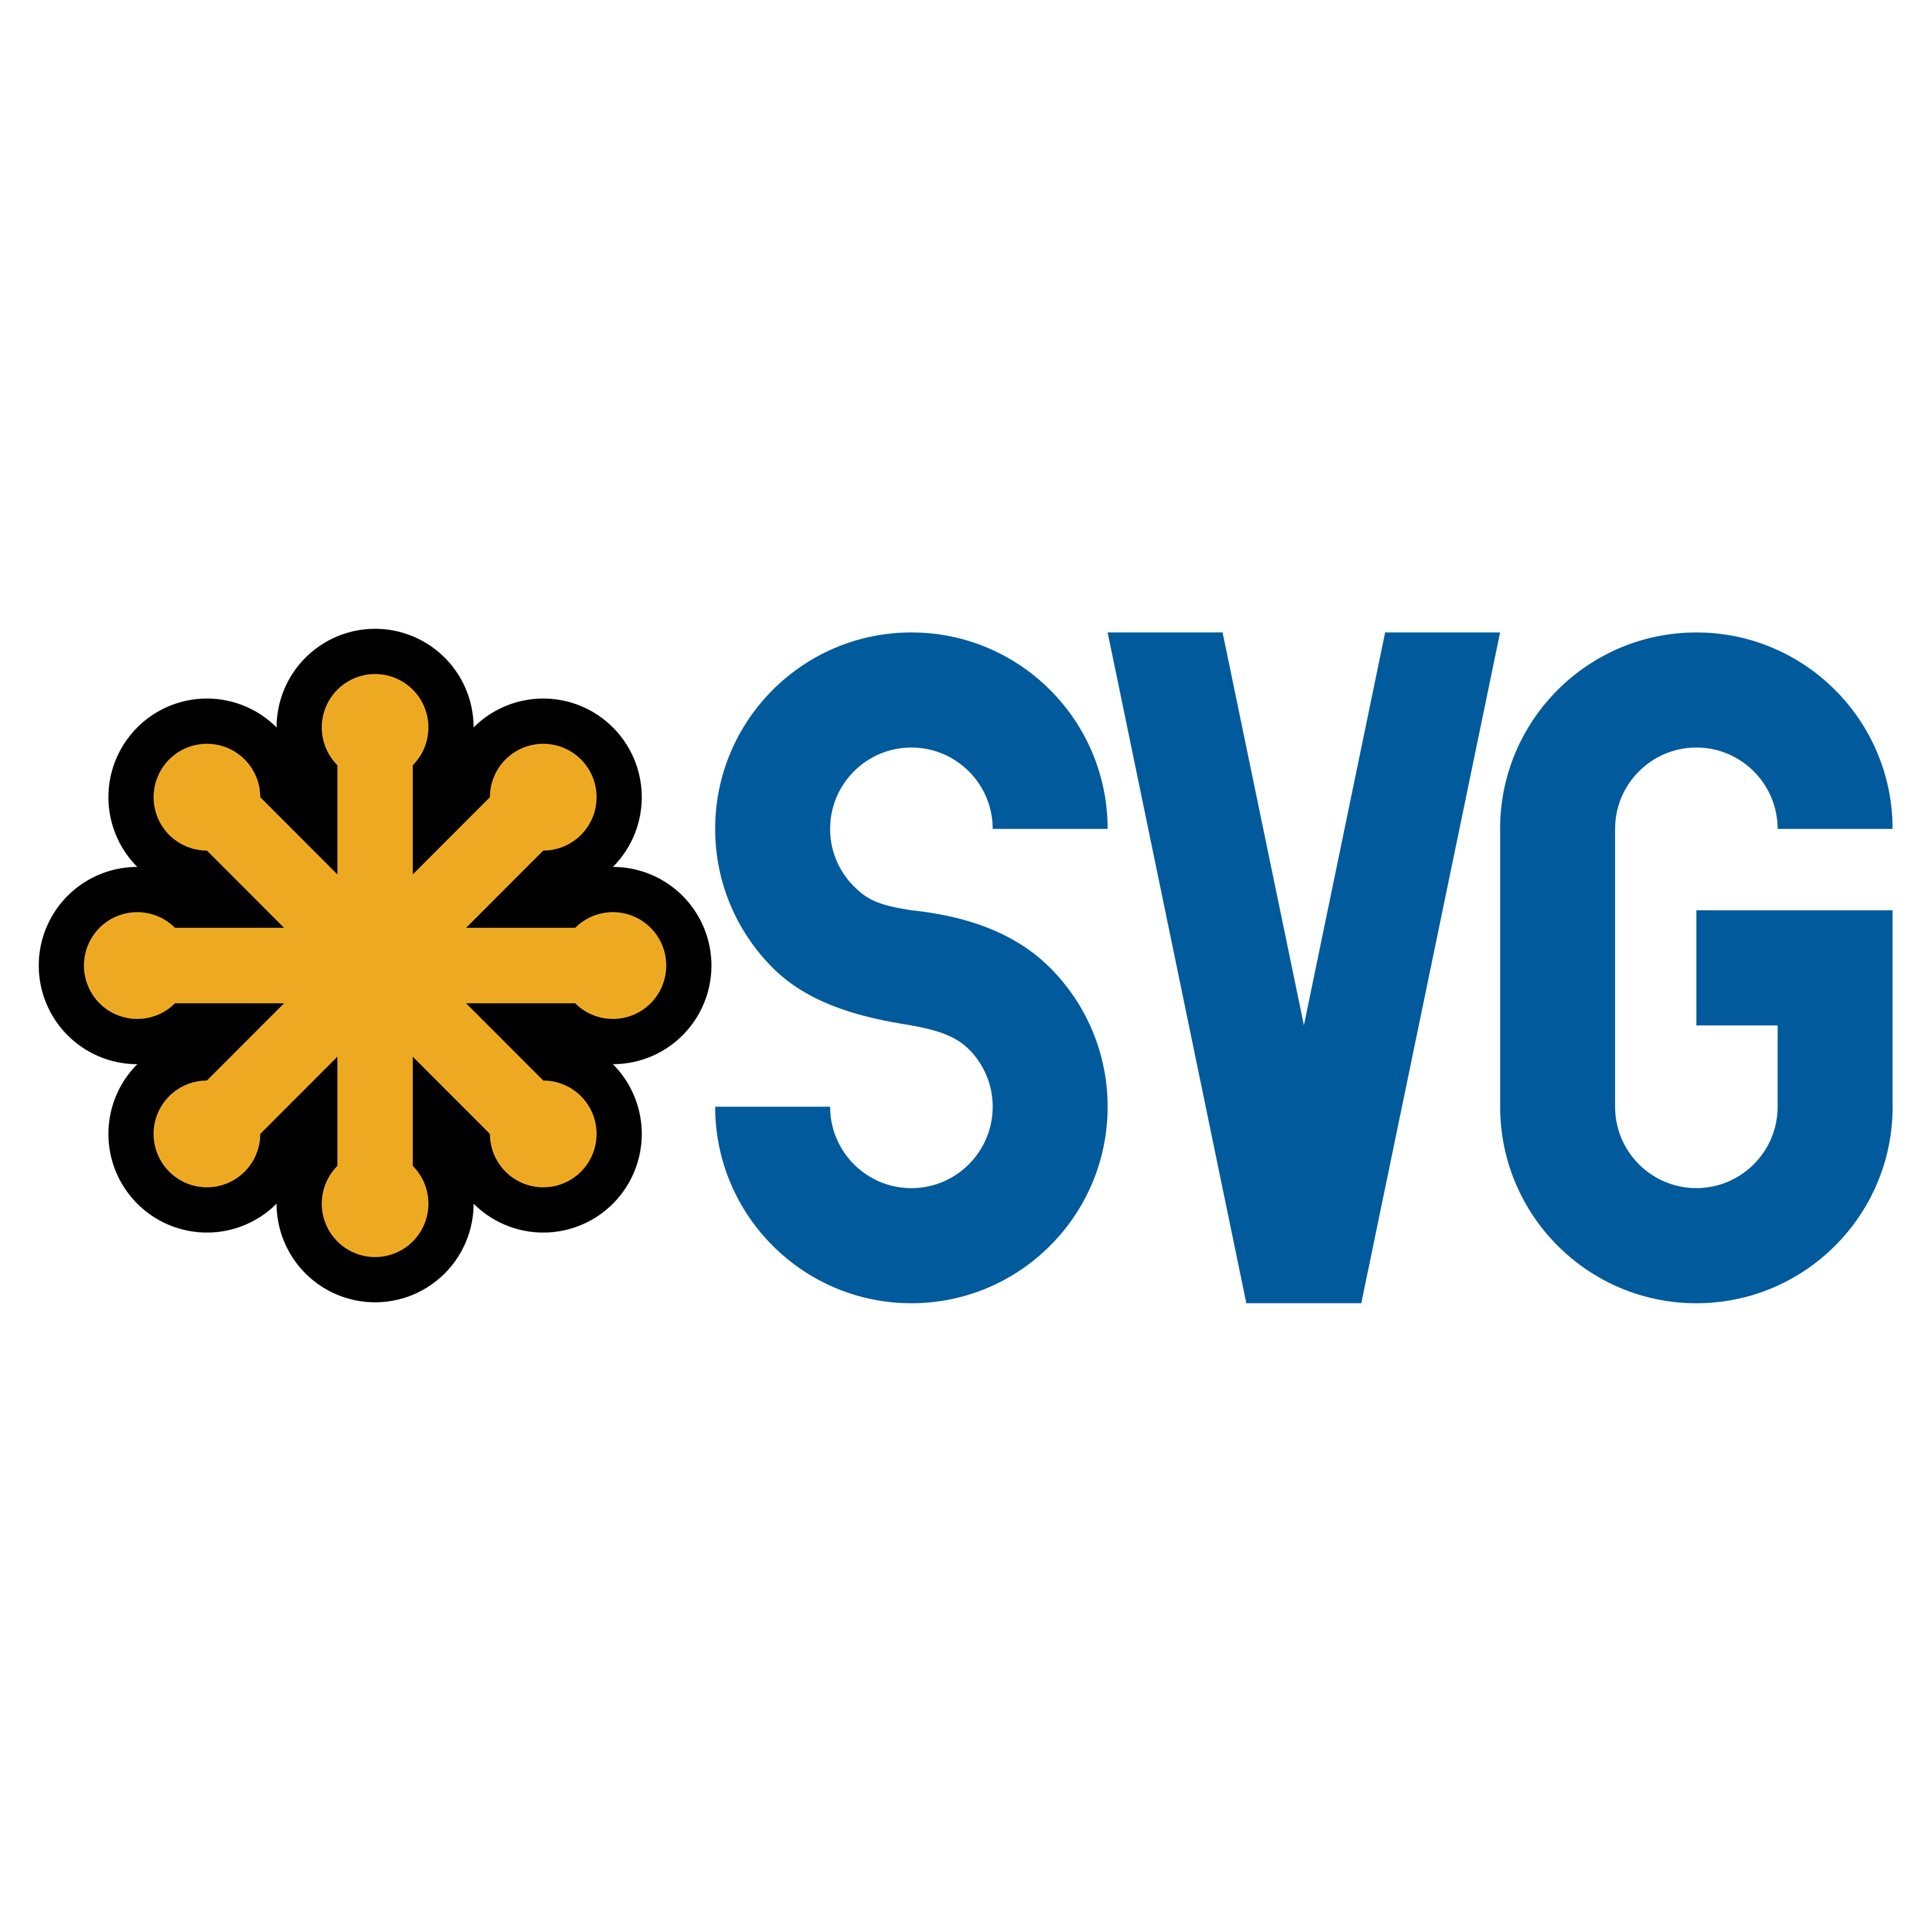 SVG Logo Transparent Picture